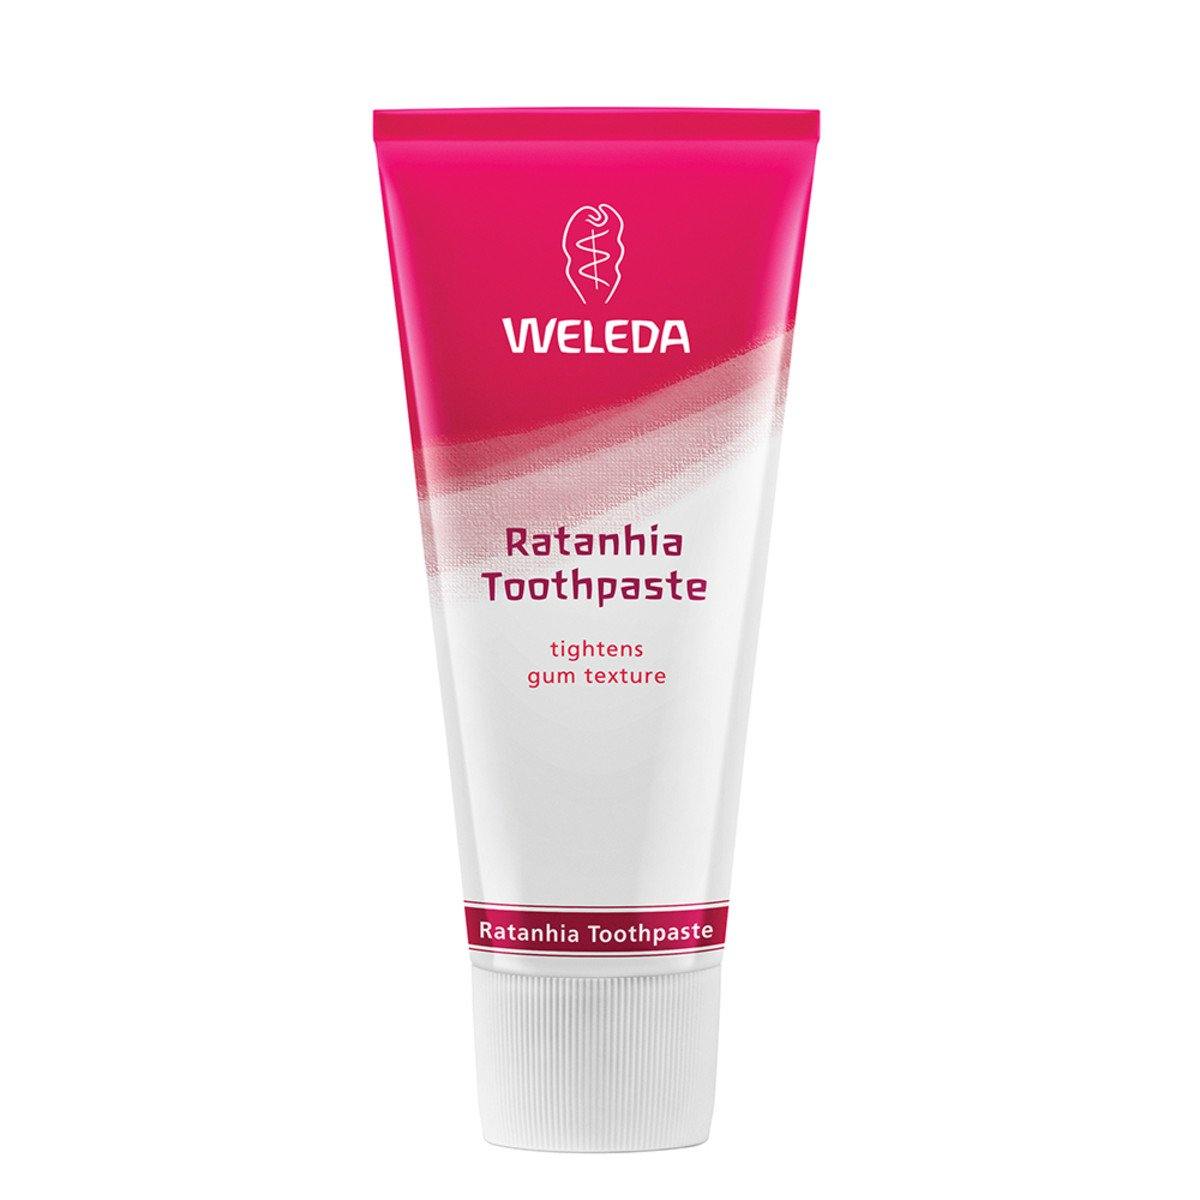 Weleda Toothpaste Ratanhia (tightens gum texture) 75ml - QVM Vitamins™